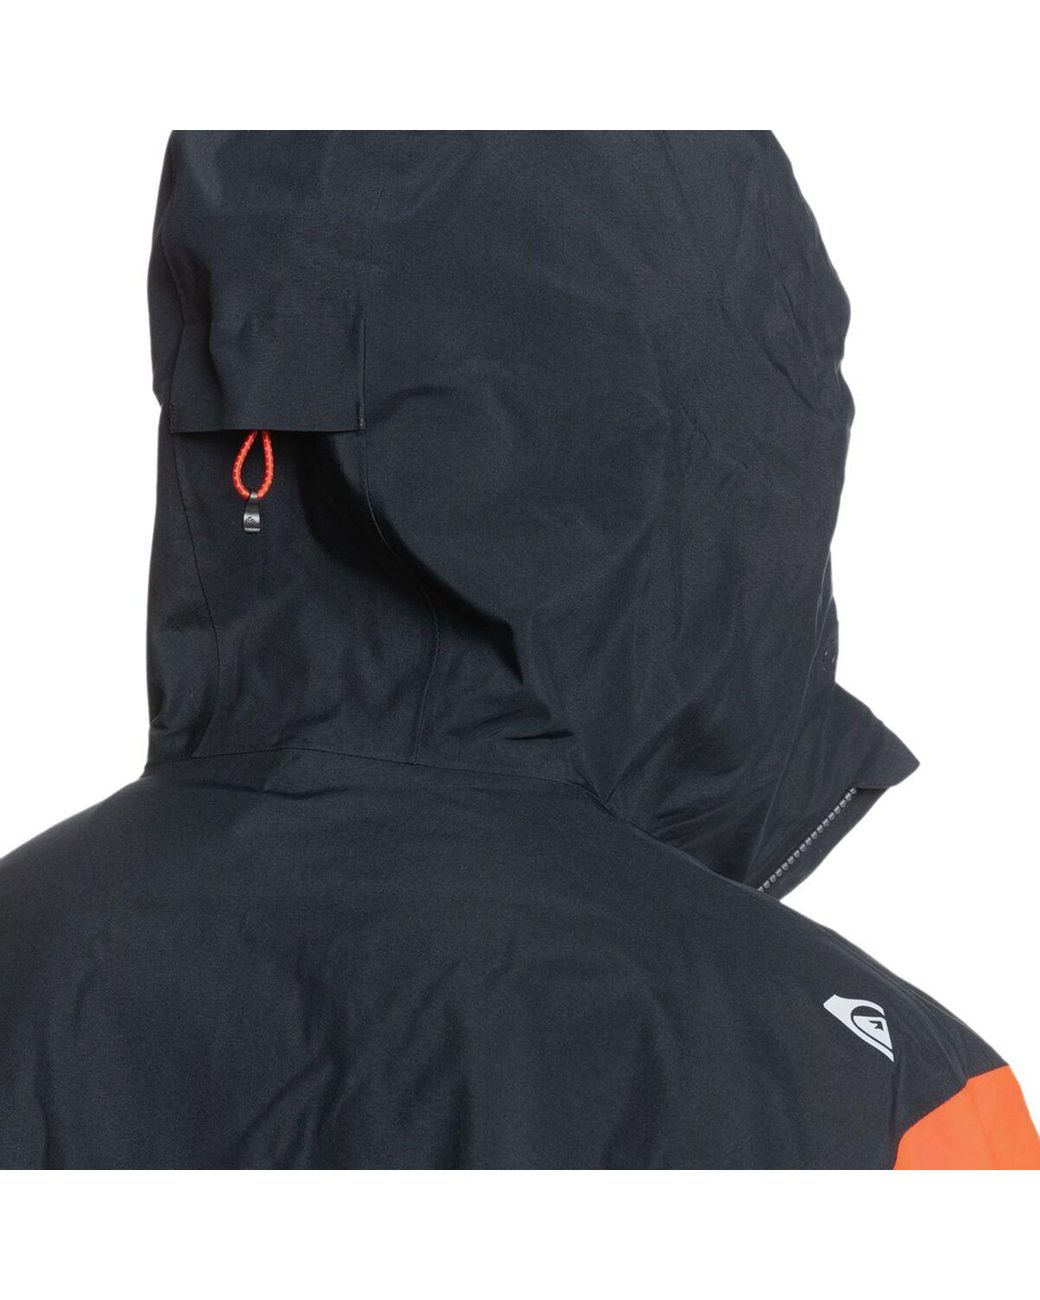 Quiksilver Highline Pro Gore-tex 3l Jacket in Black for Men | Lyst